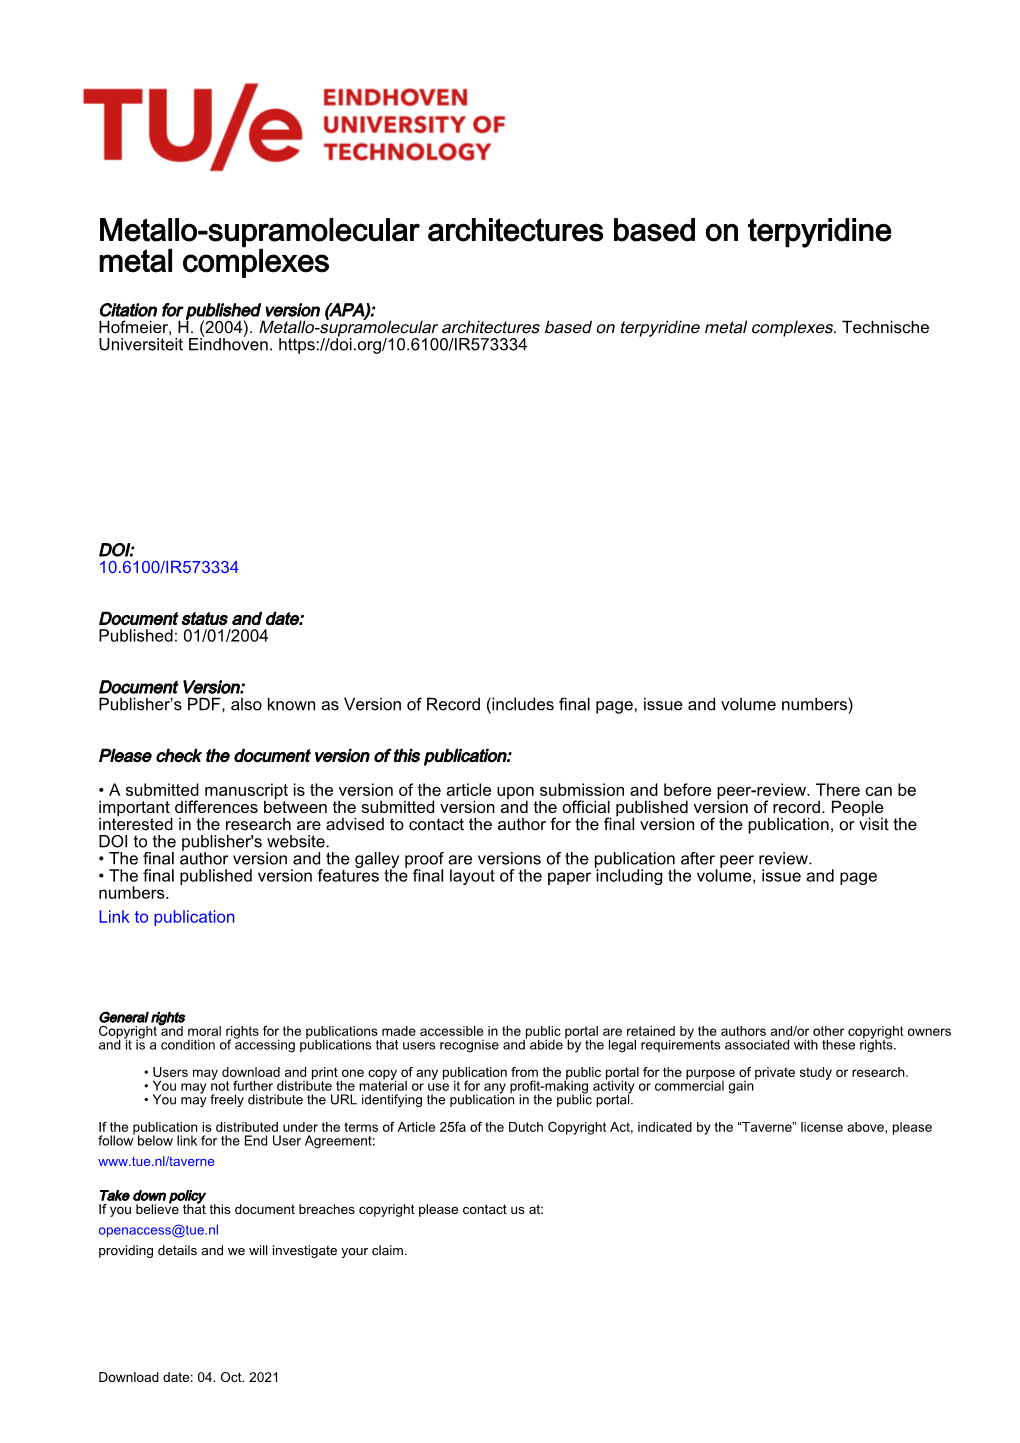 Metallo-Supramolecular Architectures Based on Terpyridine Metal Complexes